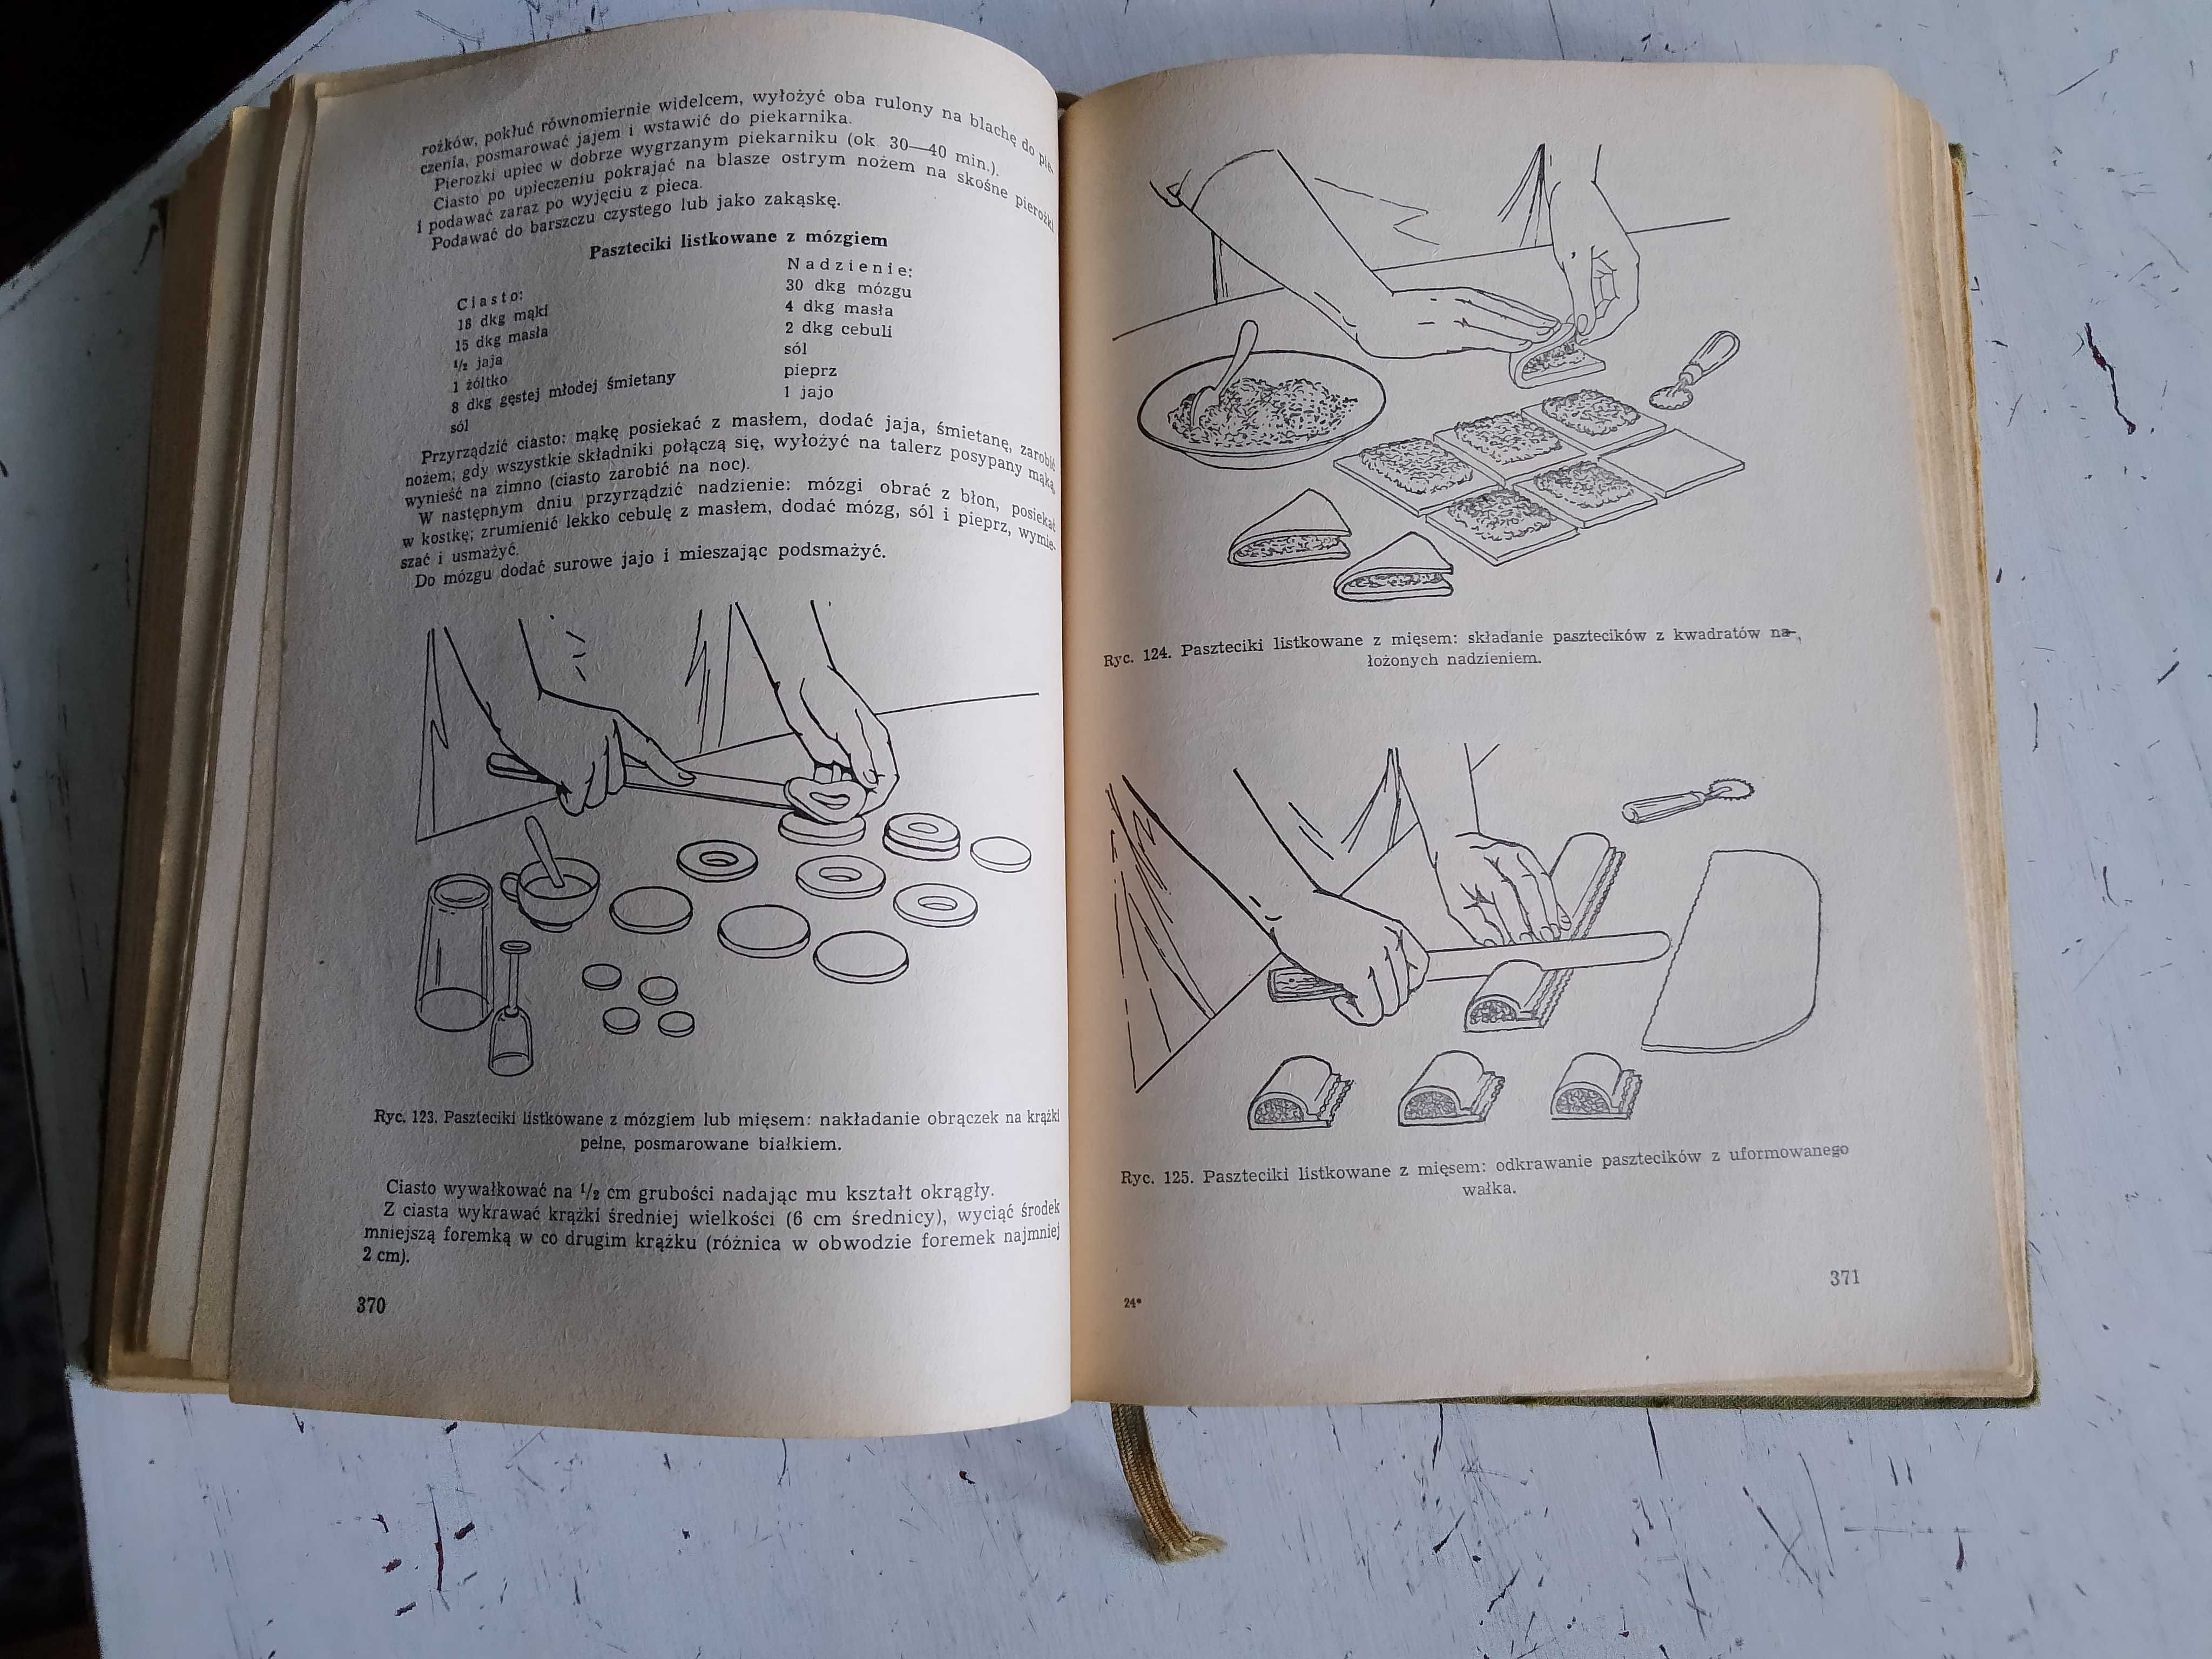 Książka kucharska z 1959 r